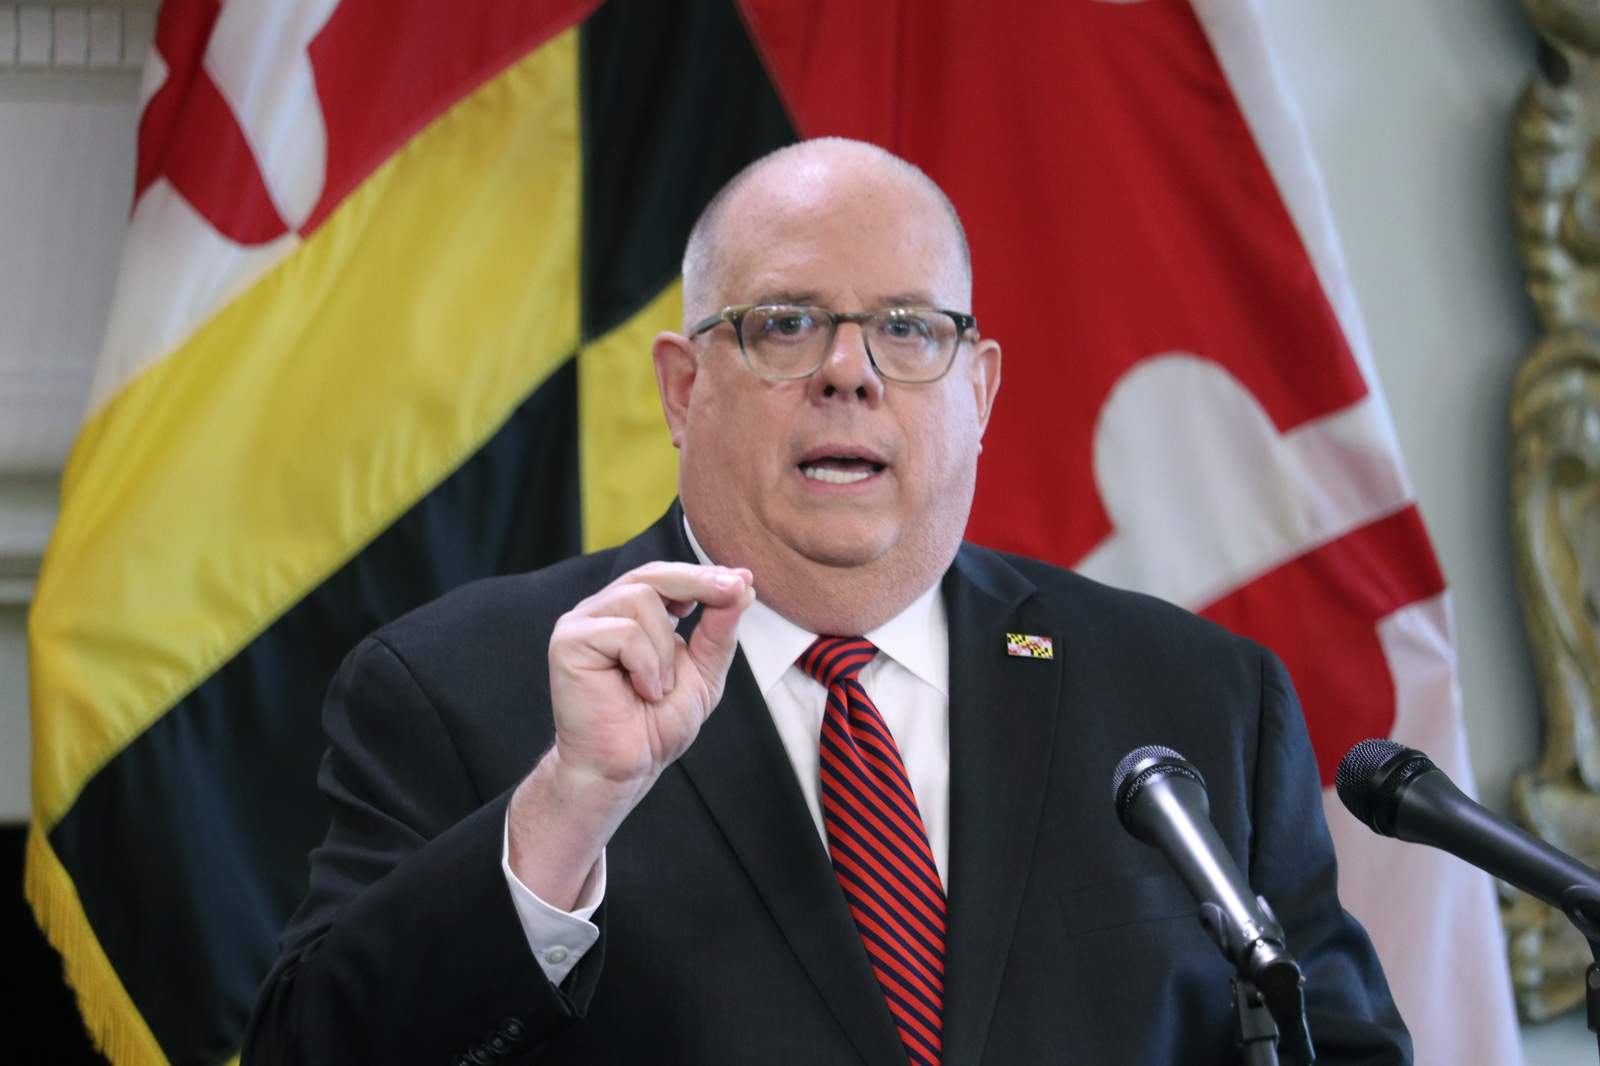 Maryland governor says GOP needs 'bigger tent' after Trump